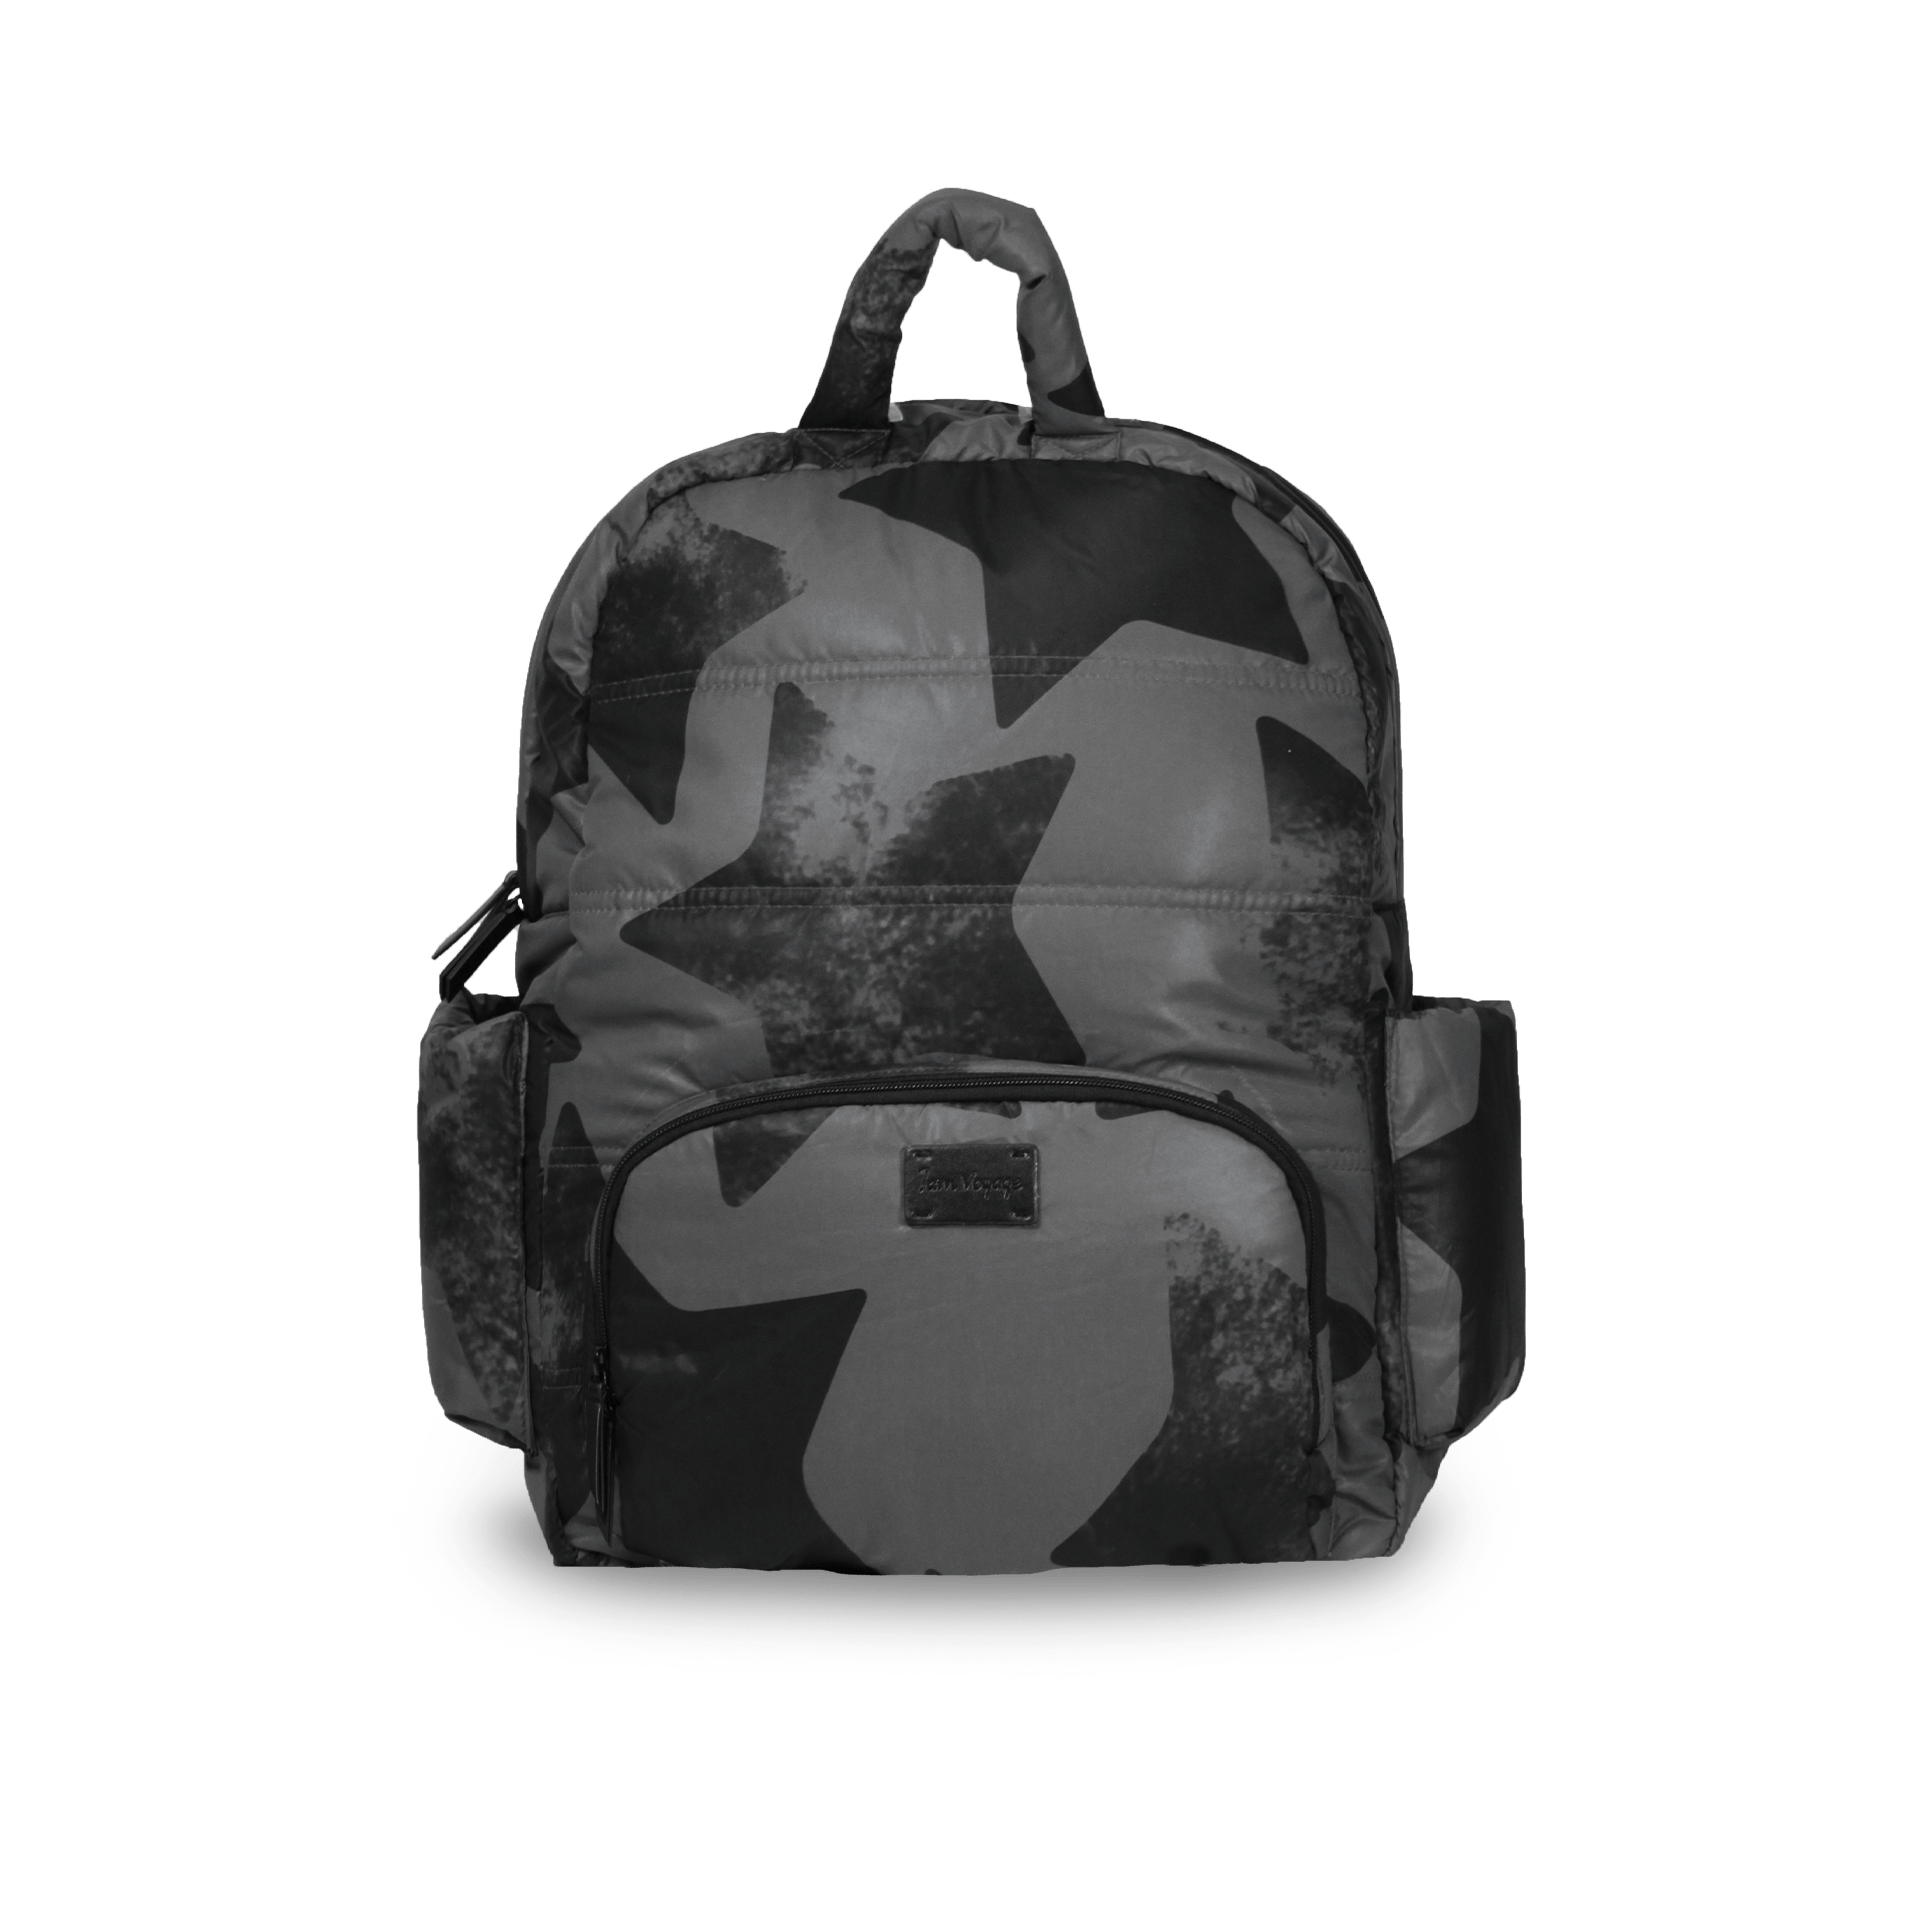 7 AM Voyage Diaper Bag Backpack, -- ANB Baby